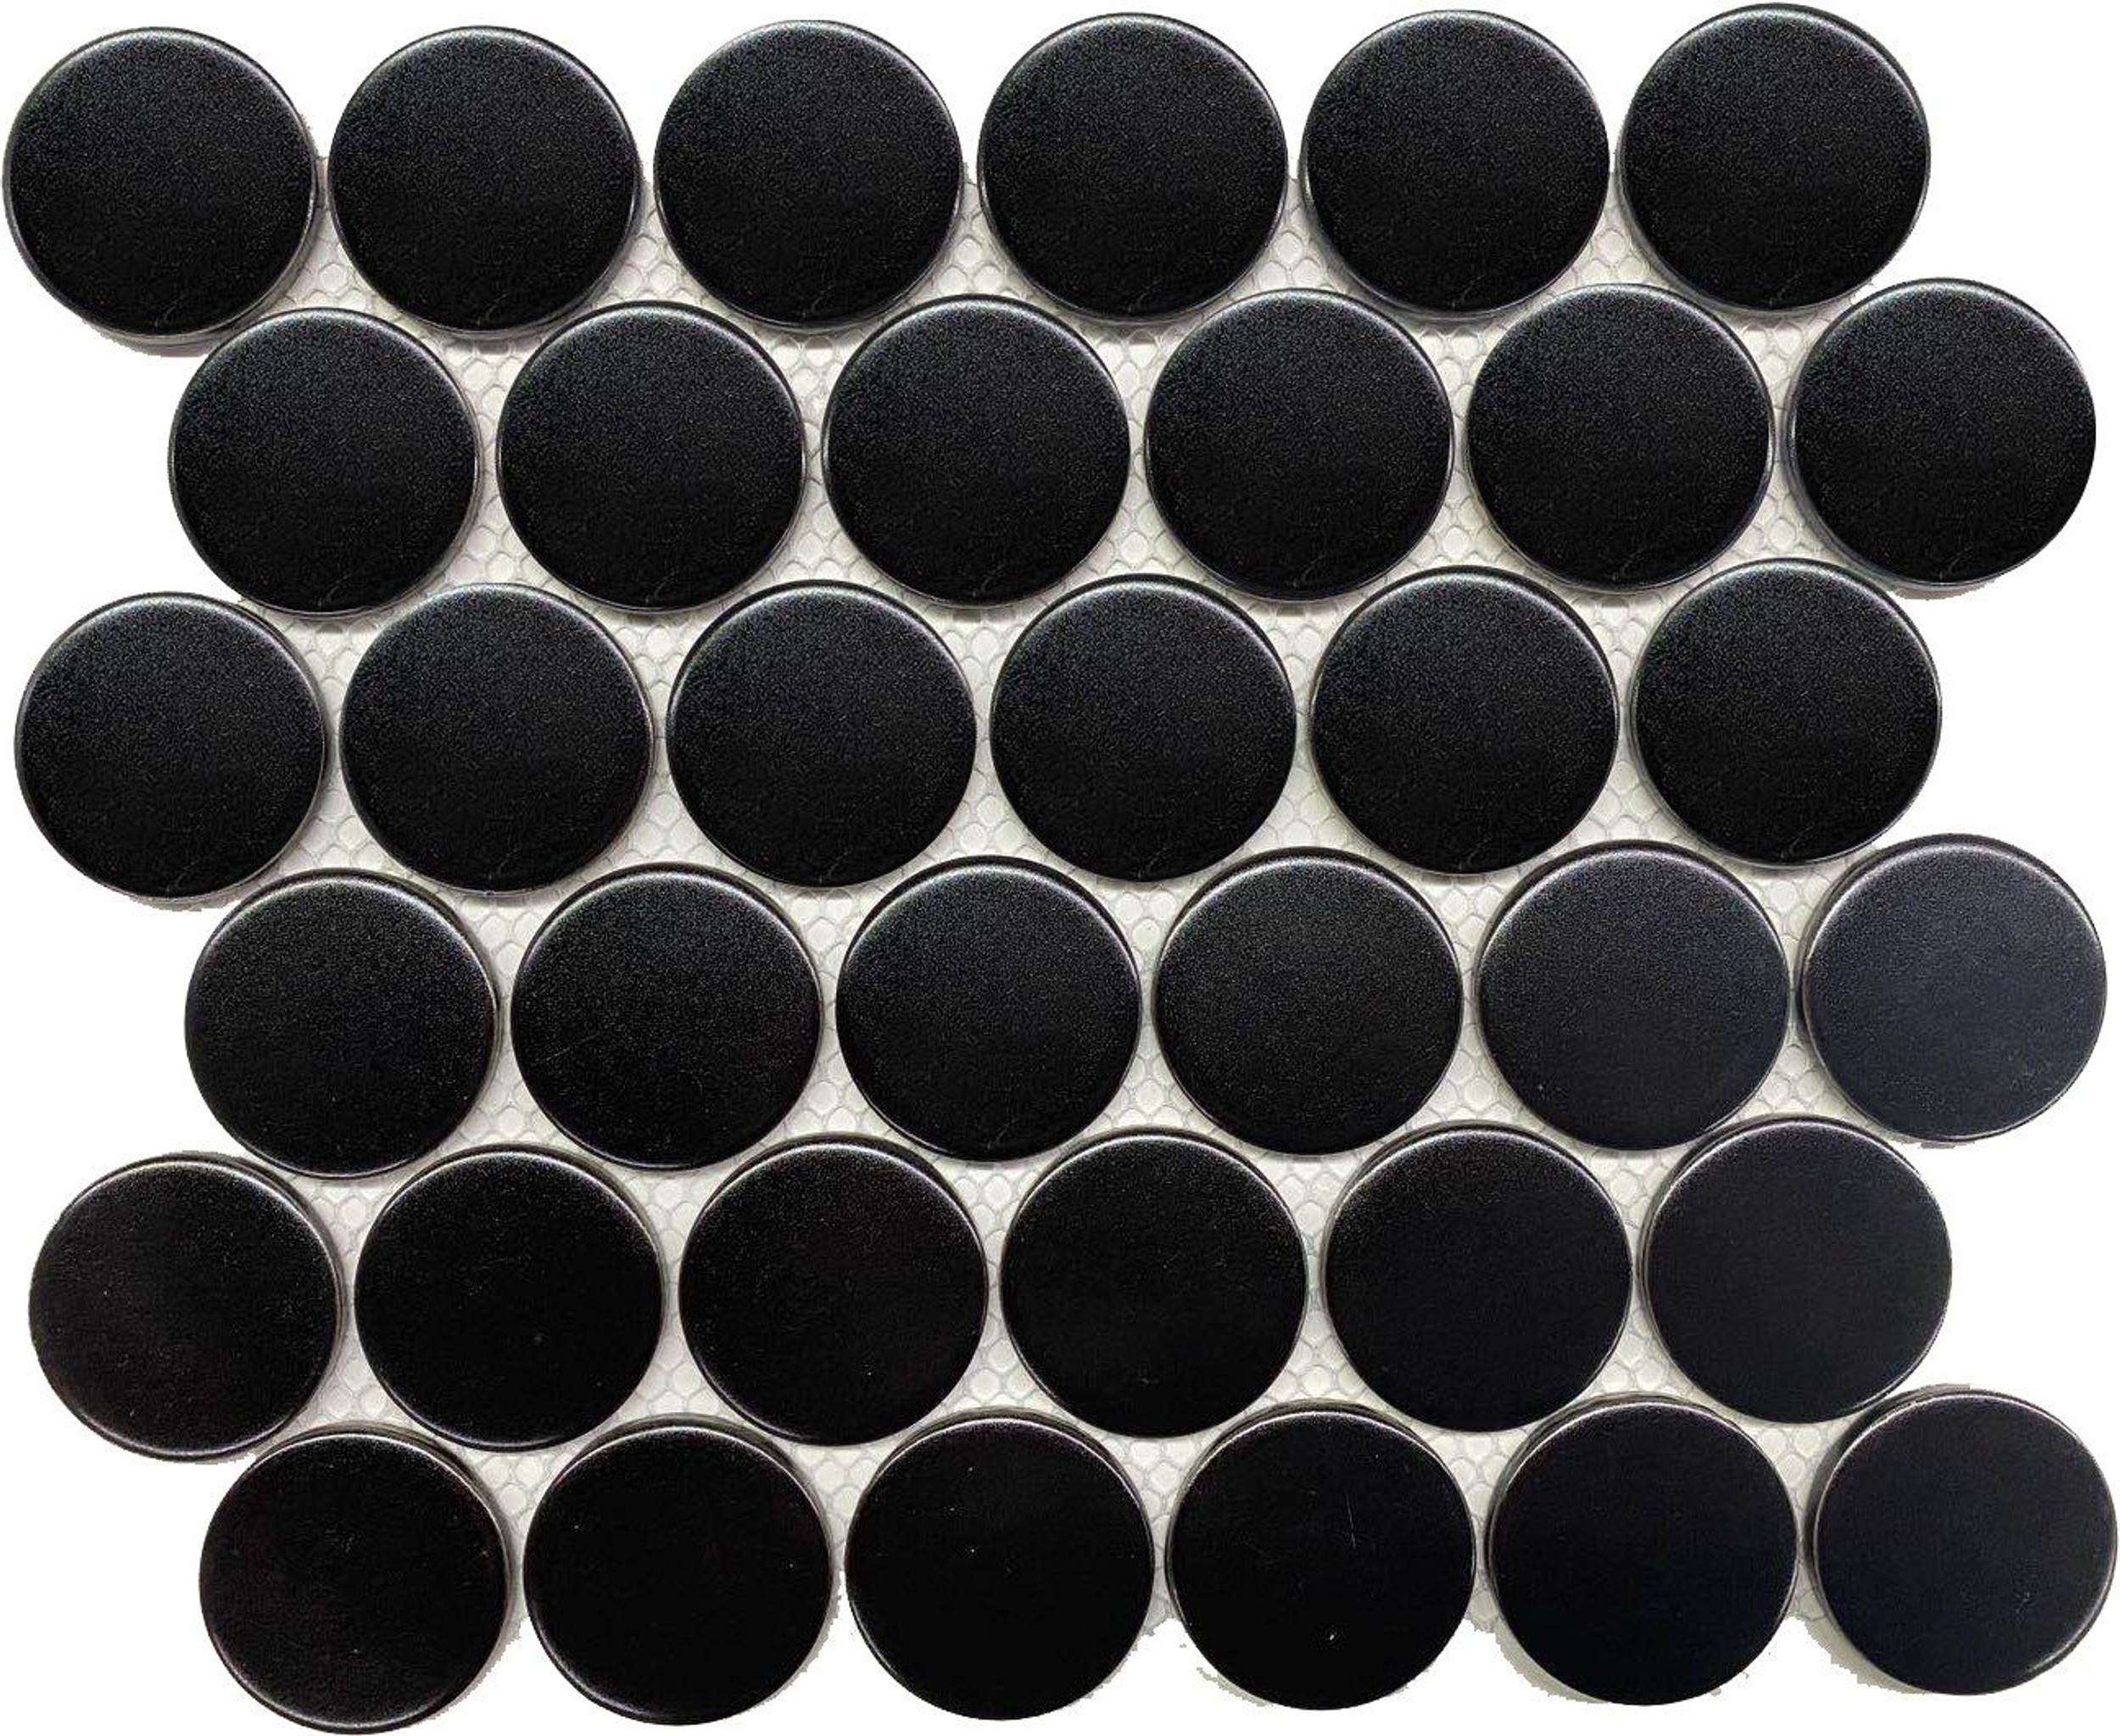 Alameda Black Matte 2" Penny round Mosaics